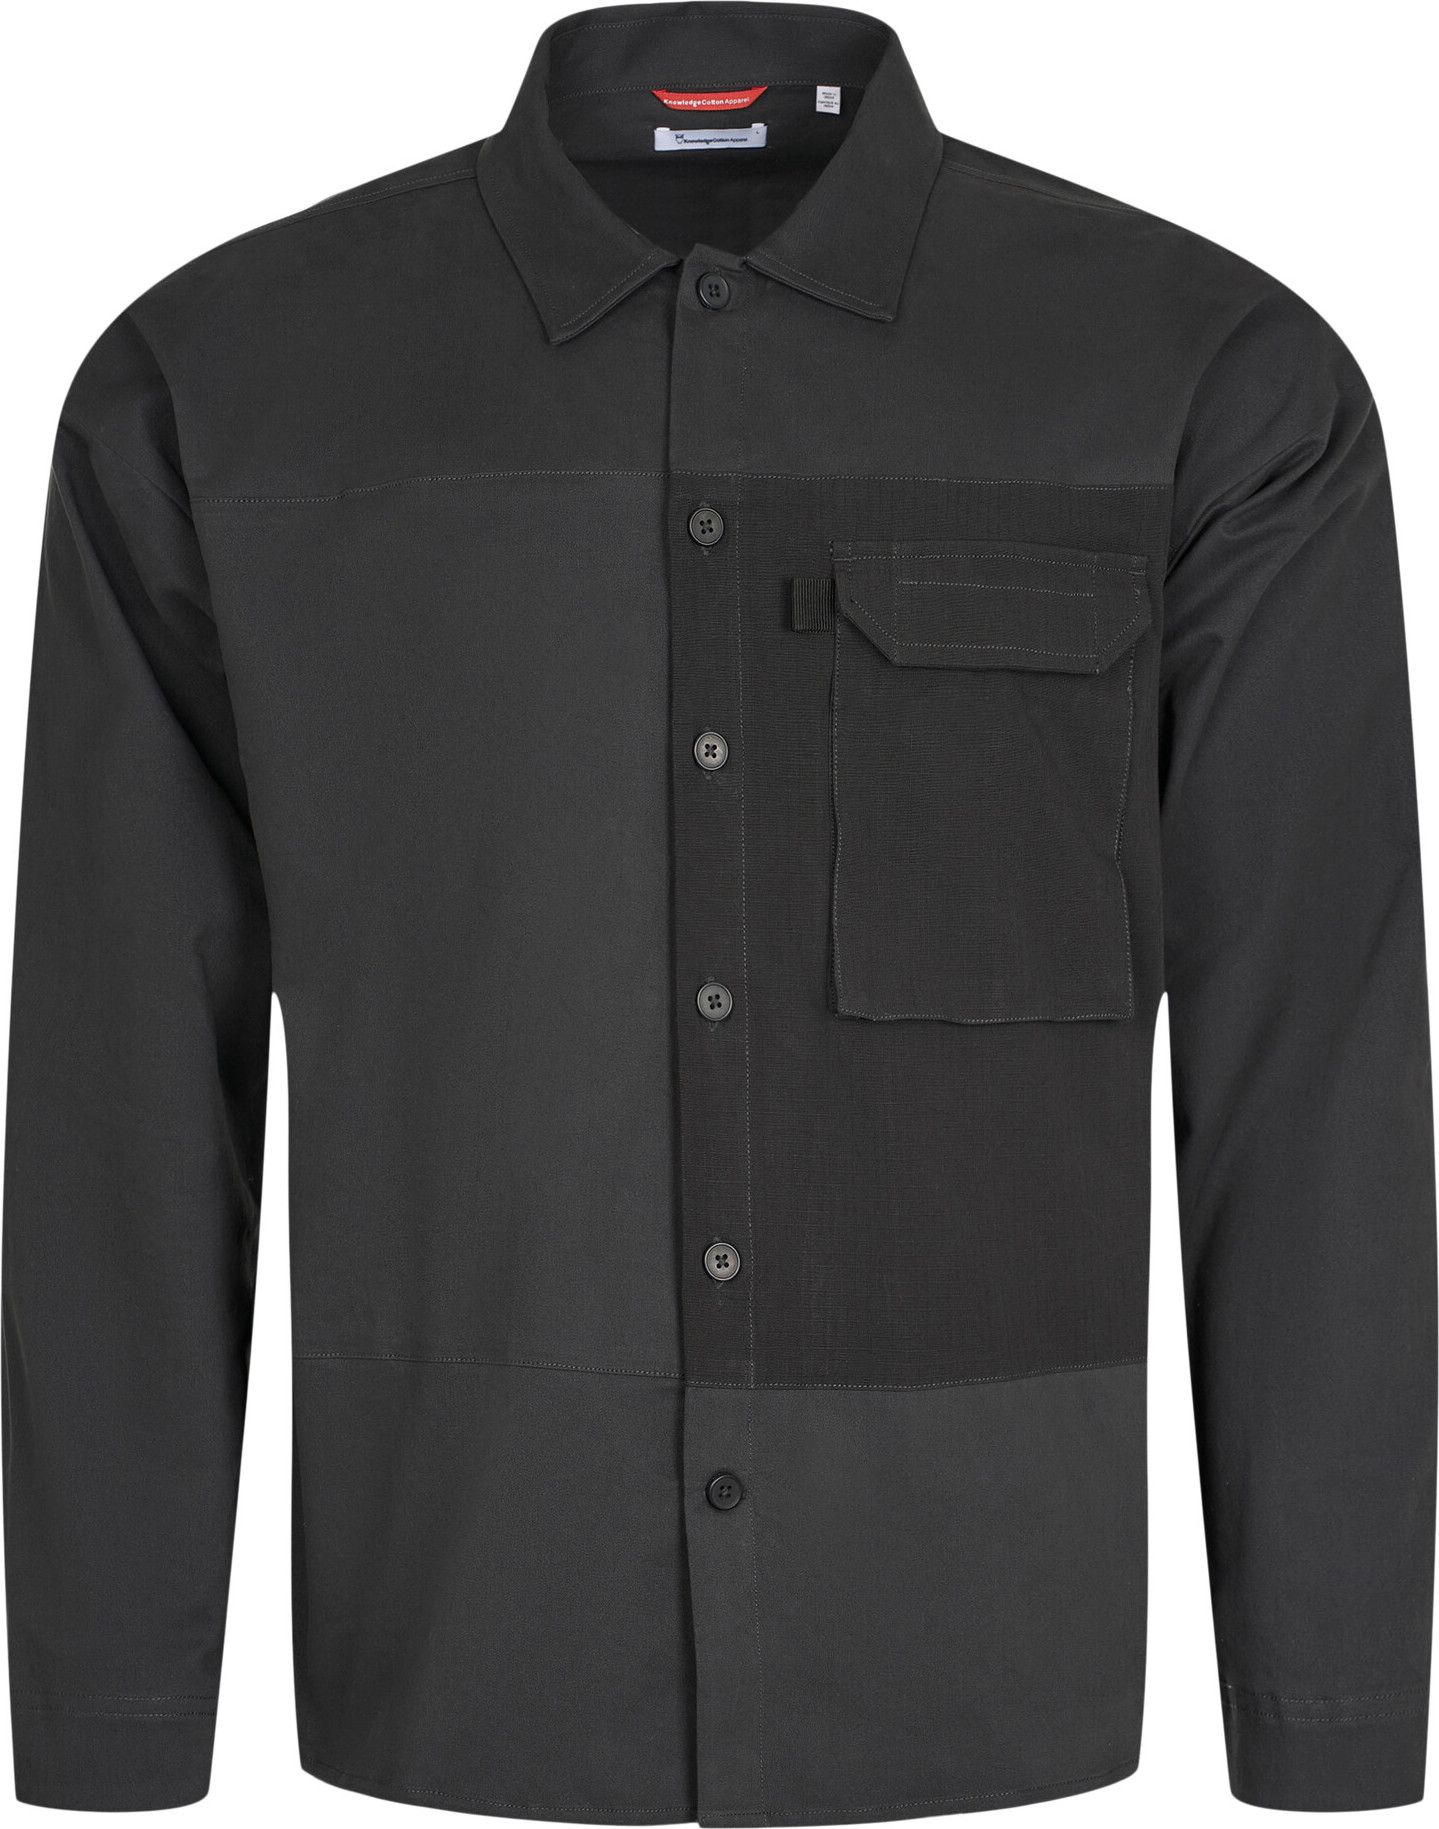 Men's Outdoor Twill Overshirt With Contrast Fabric Phantom